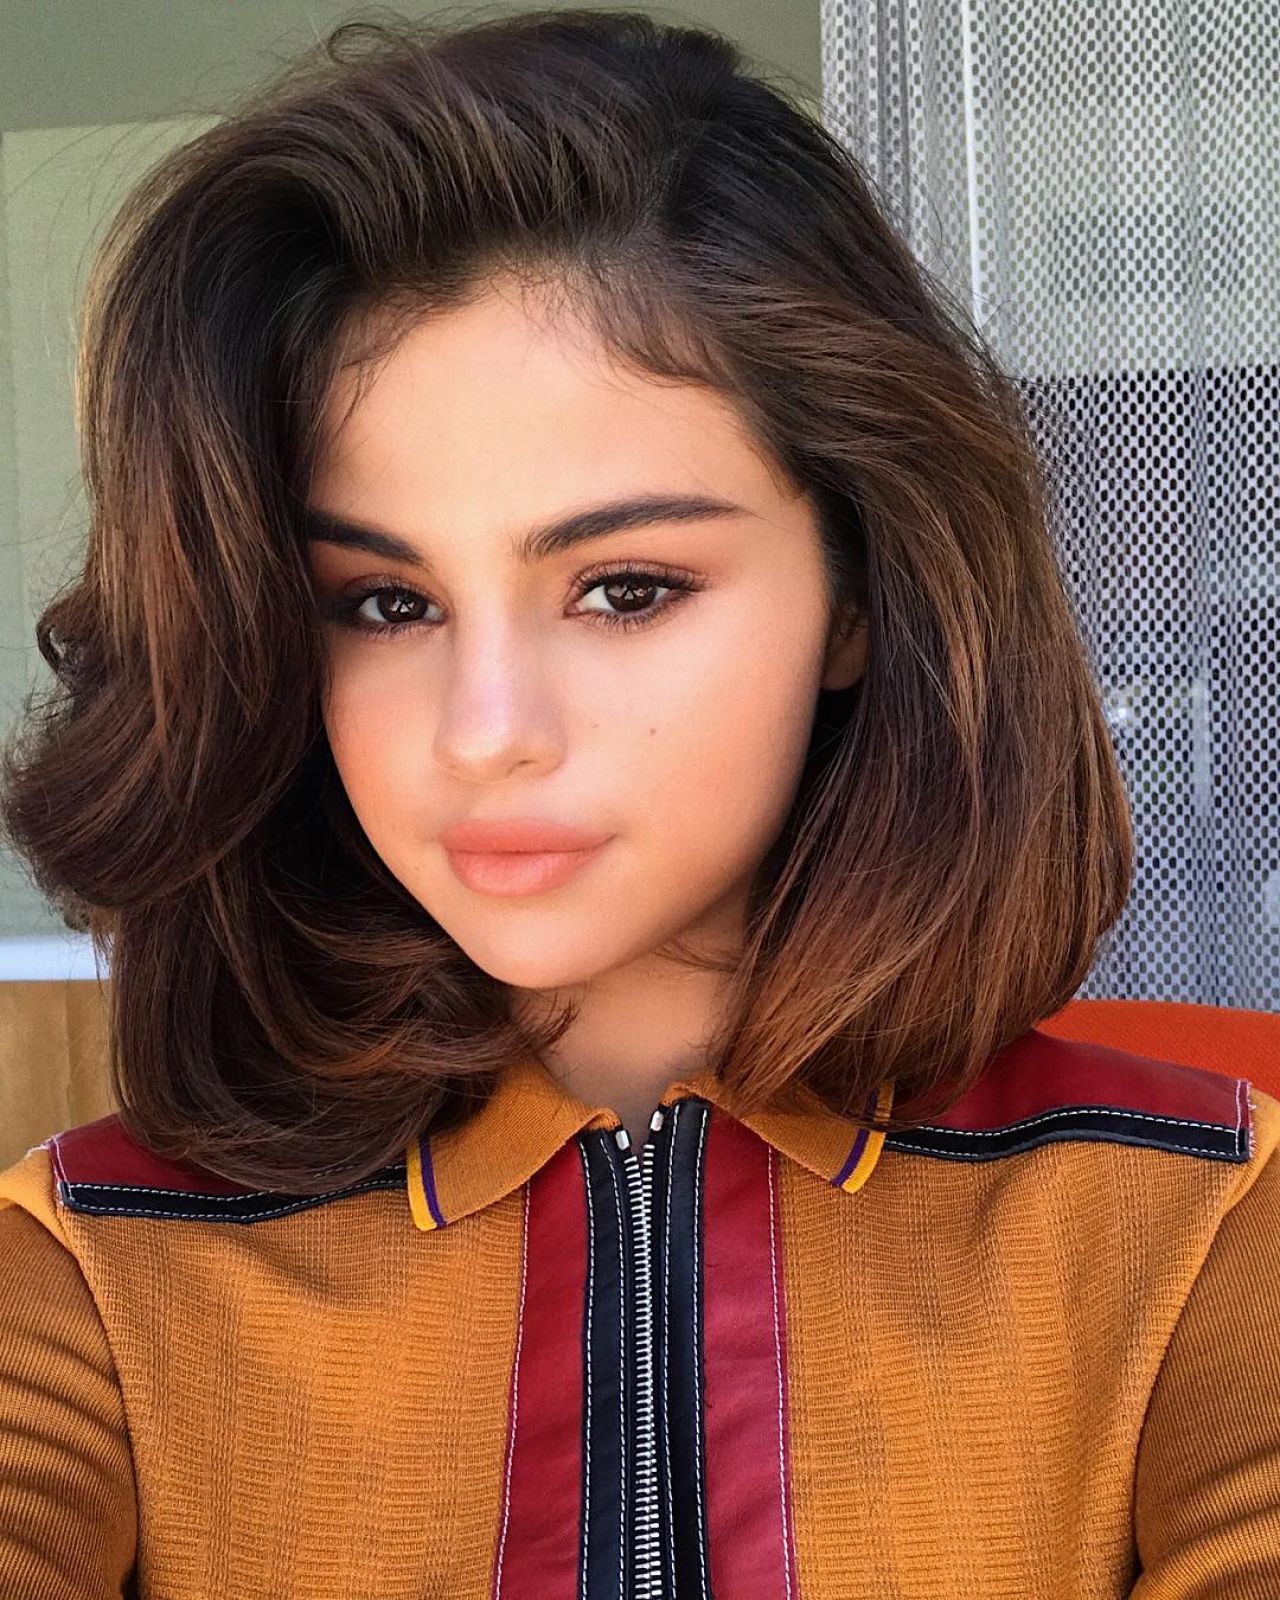 Stunning Selena Gomez selfie